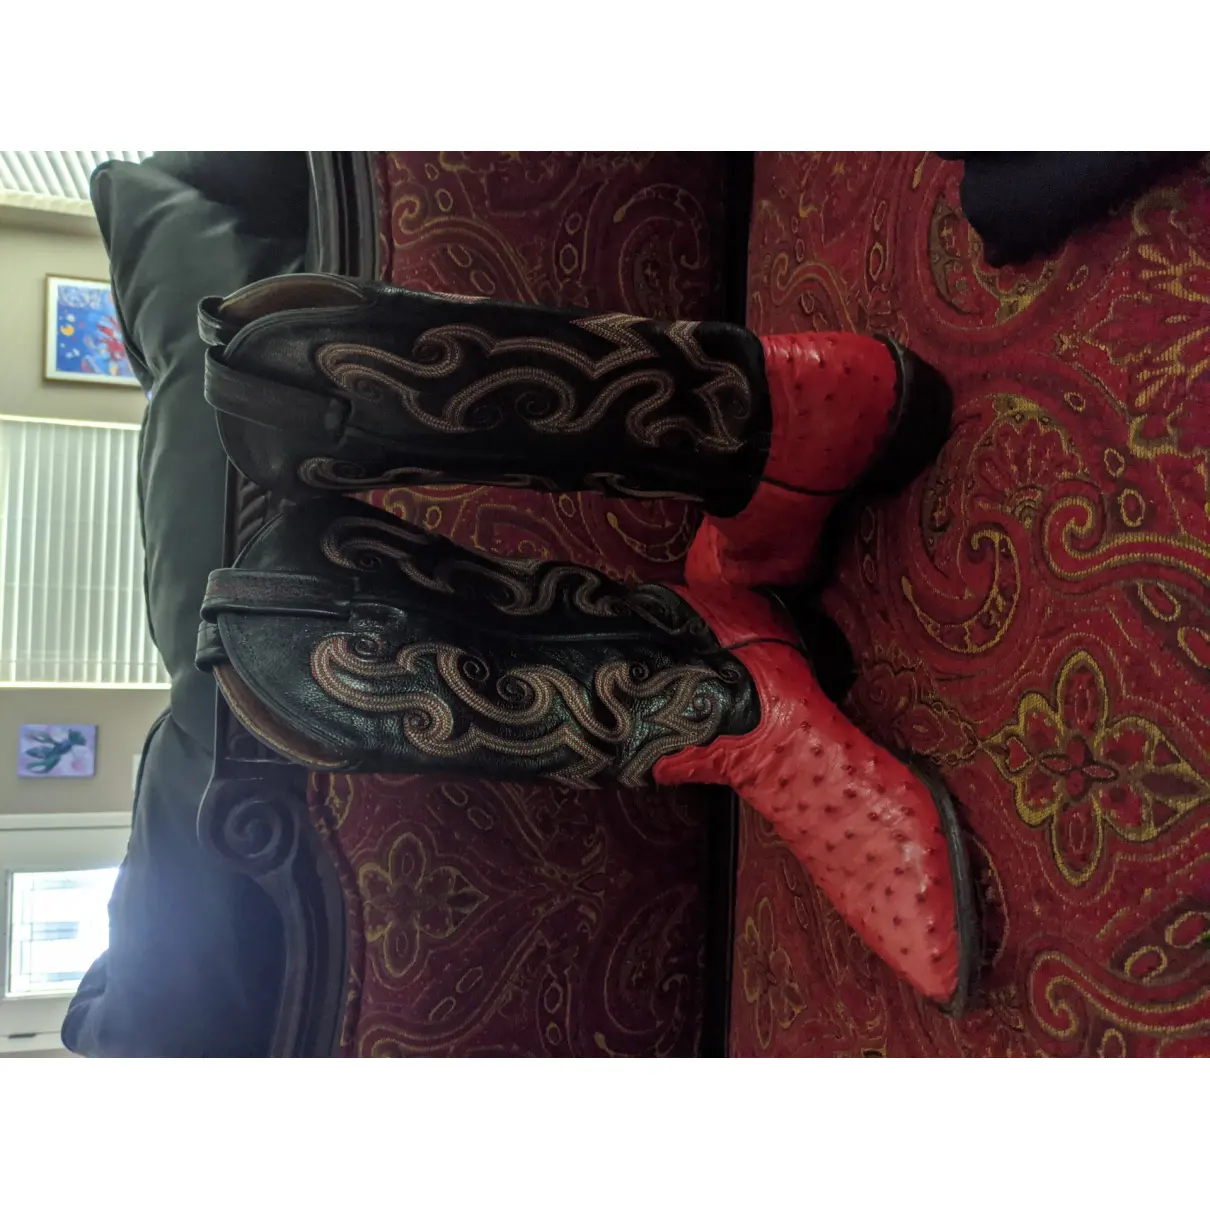 Buy Tony Lama Ostrich cowboy boots online